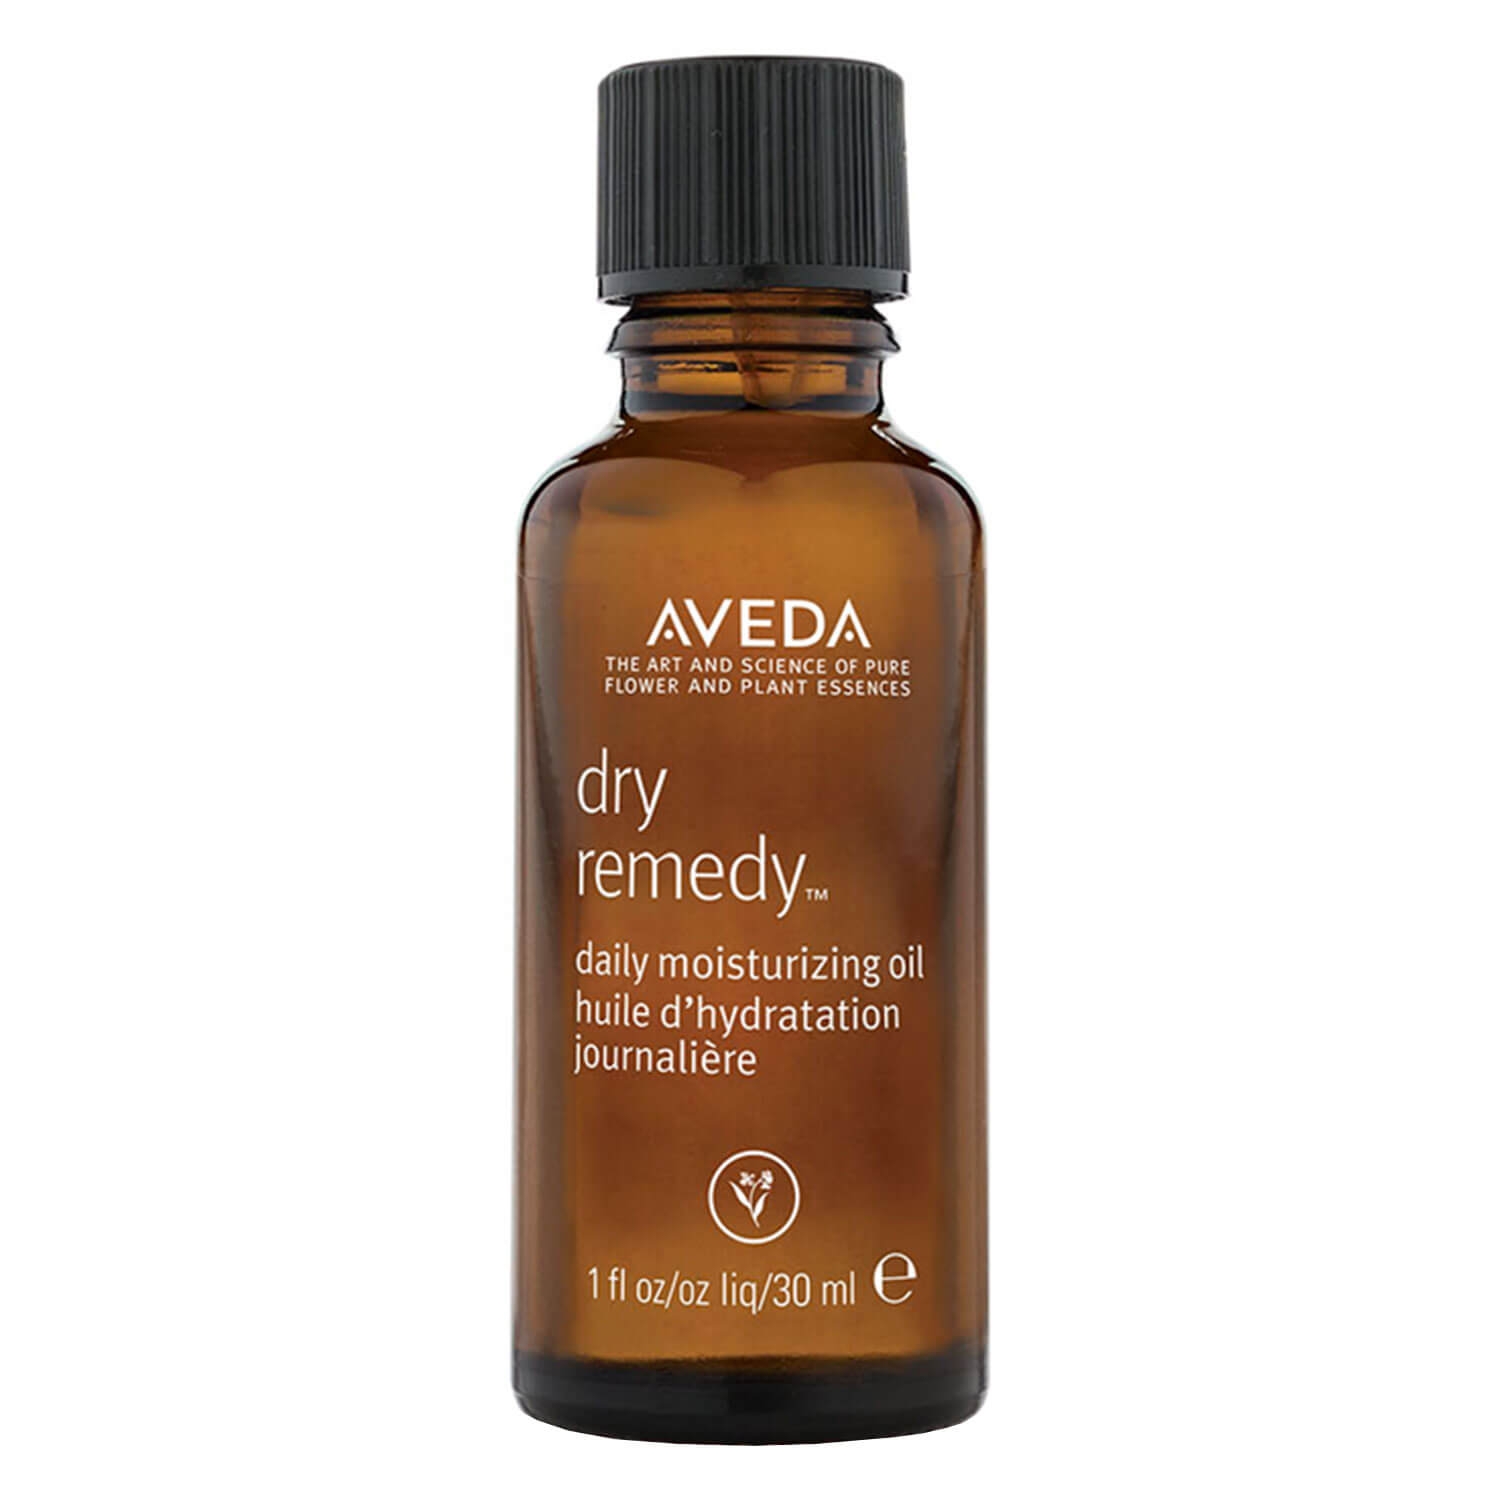 Produktbild von dry remedy - daily moisturizing oil